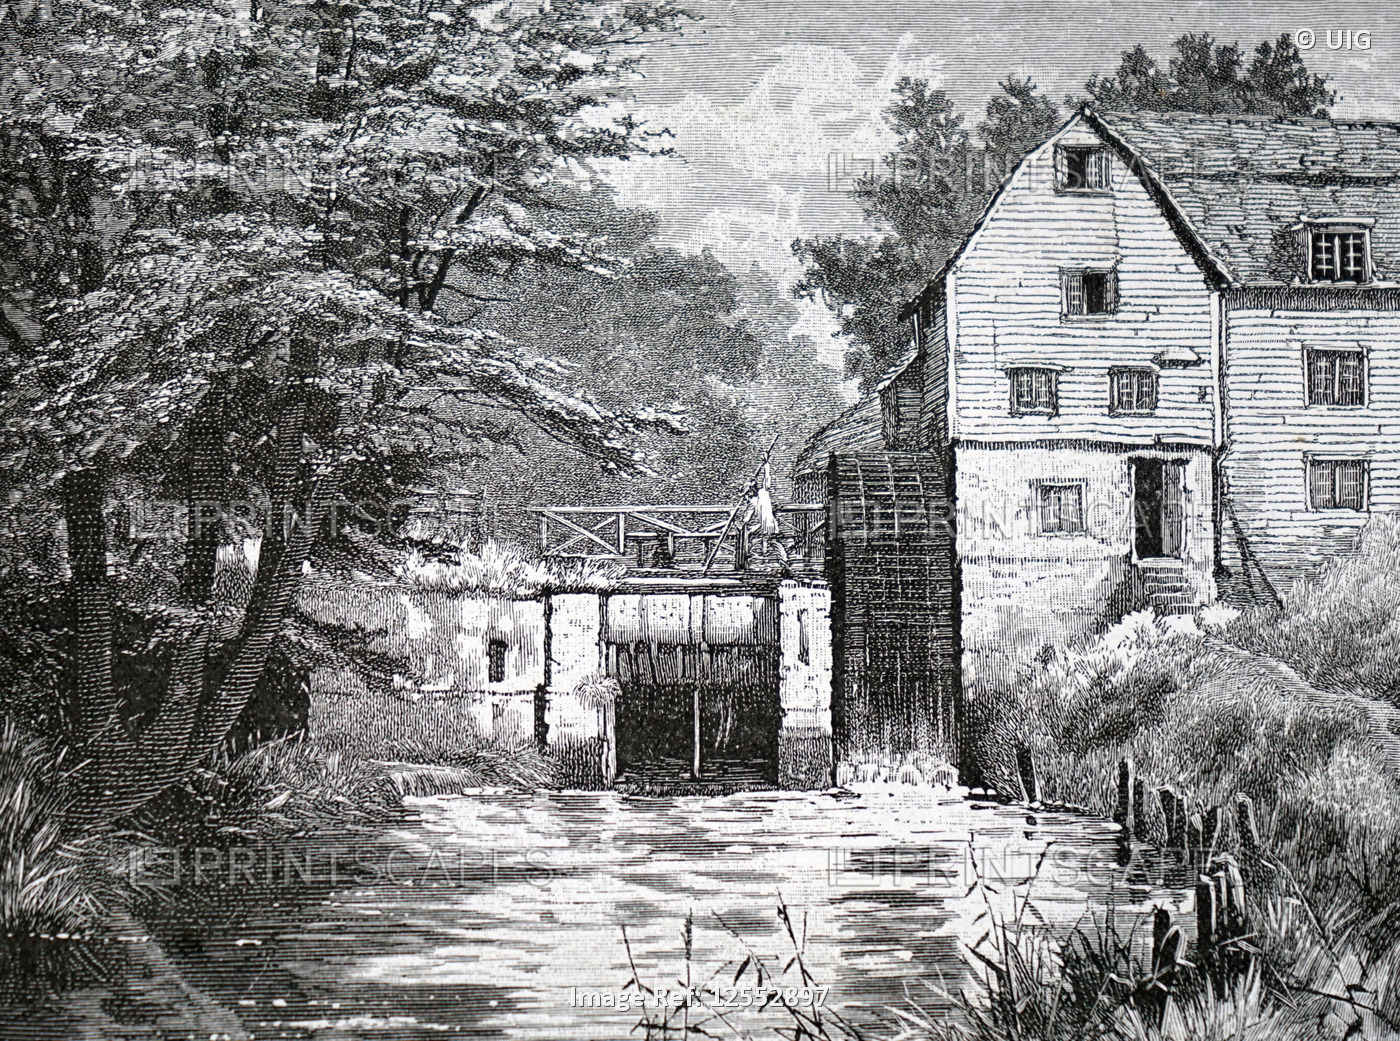 Illustration depicting Castle Mill